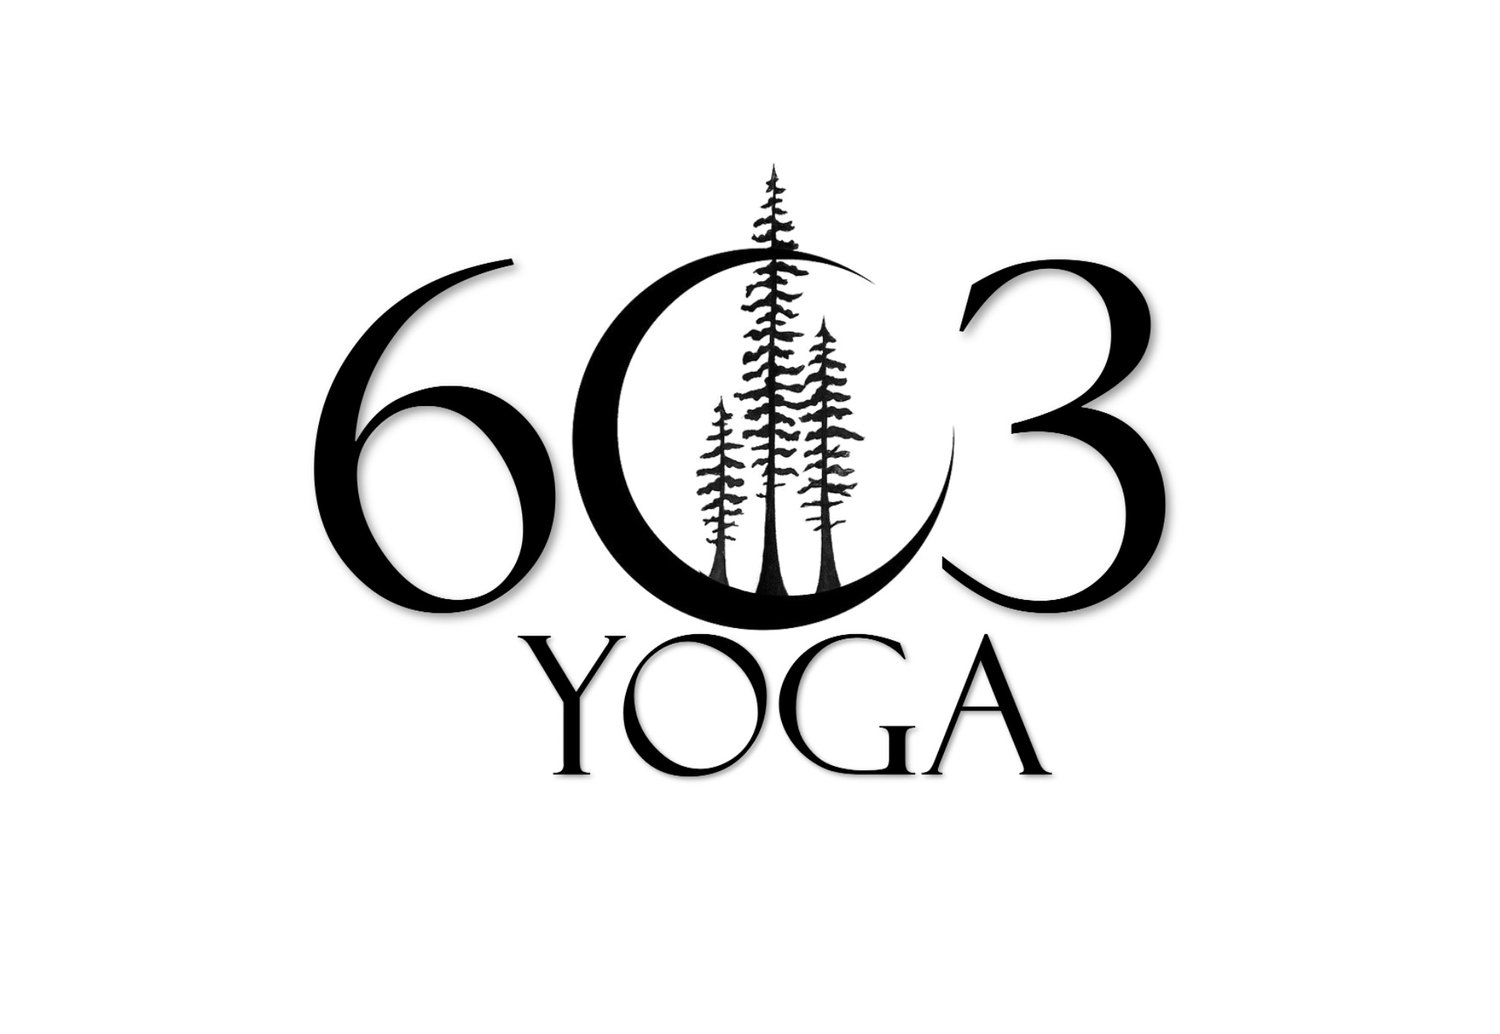 603 Yoga